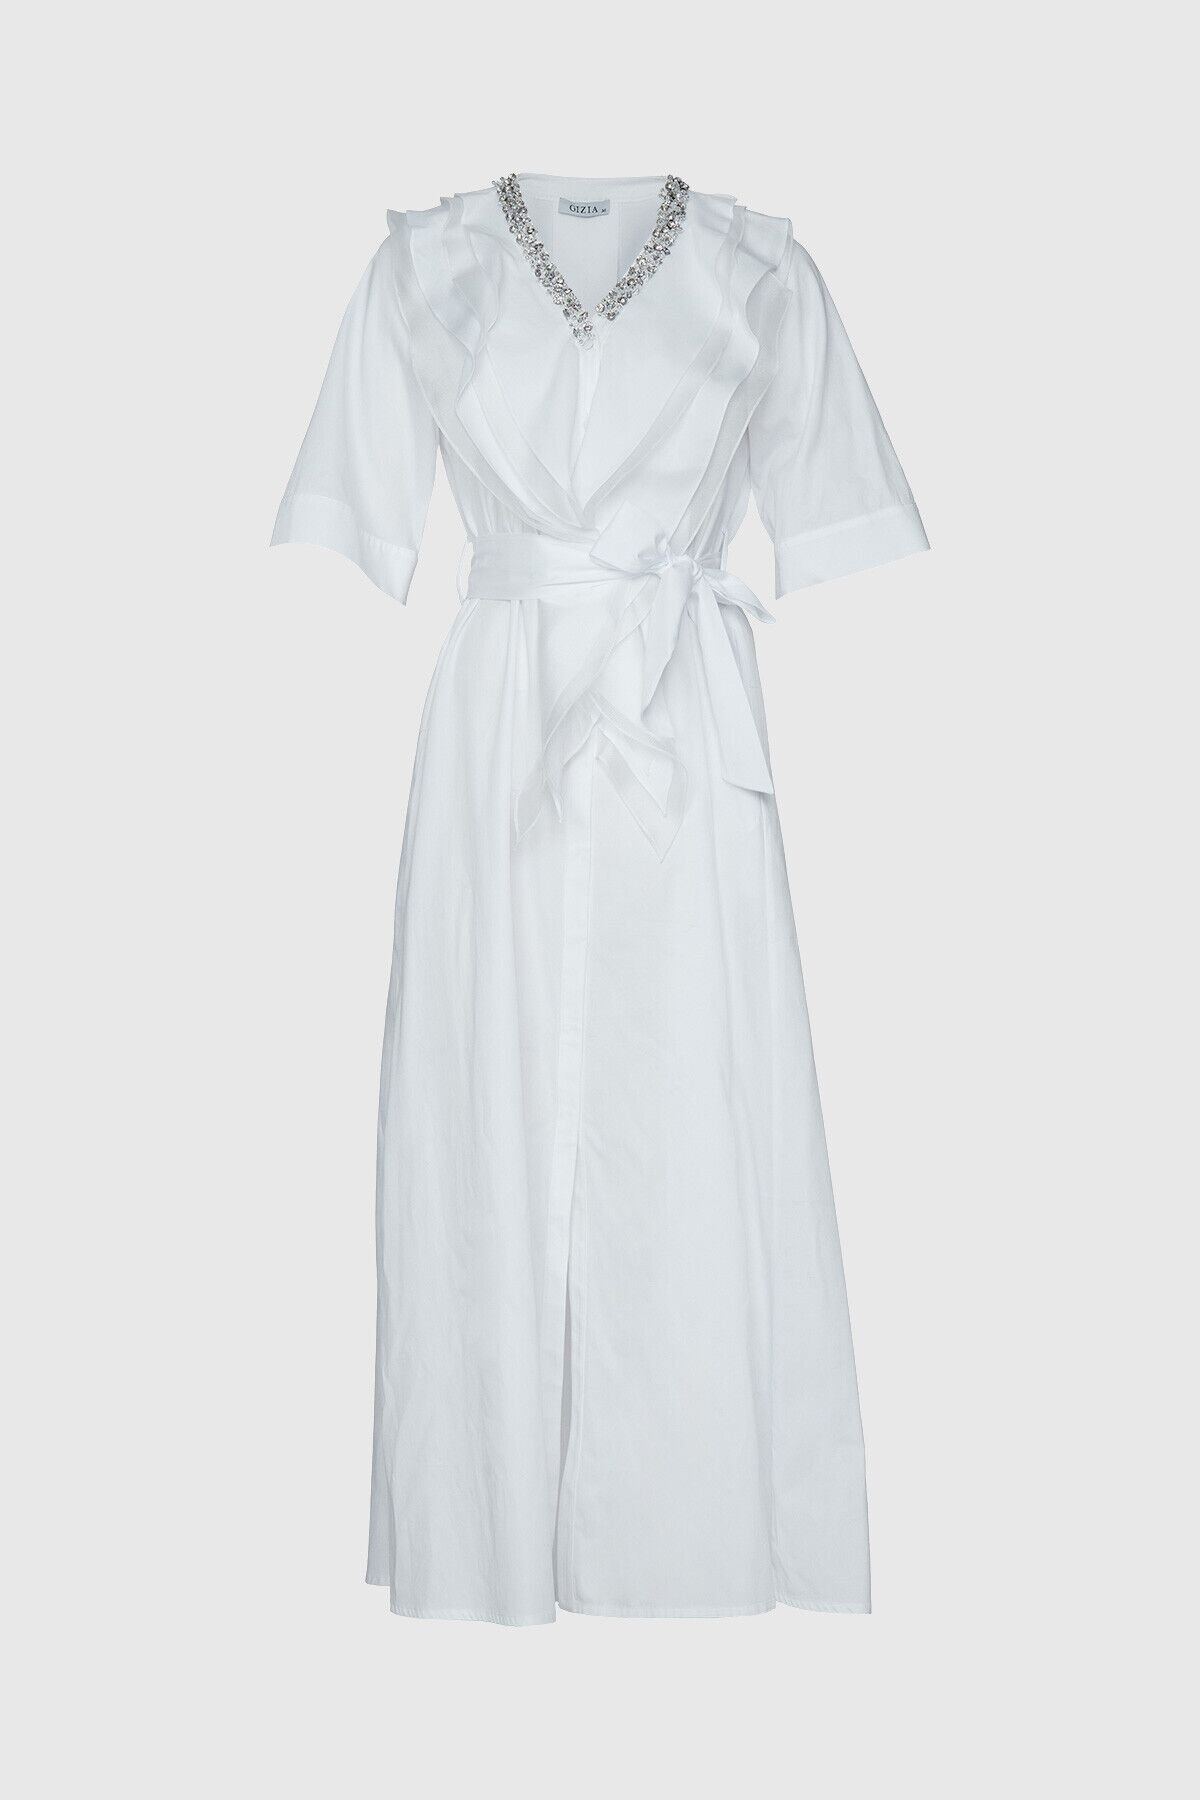 Stone And Waist Sash Tie Detailed Long White Dress